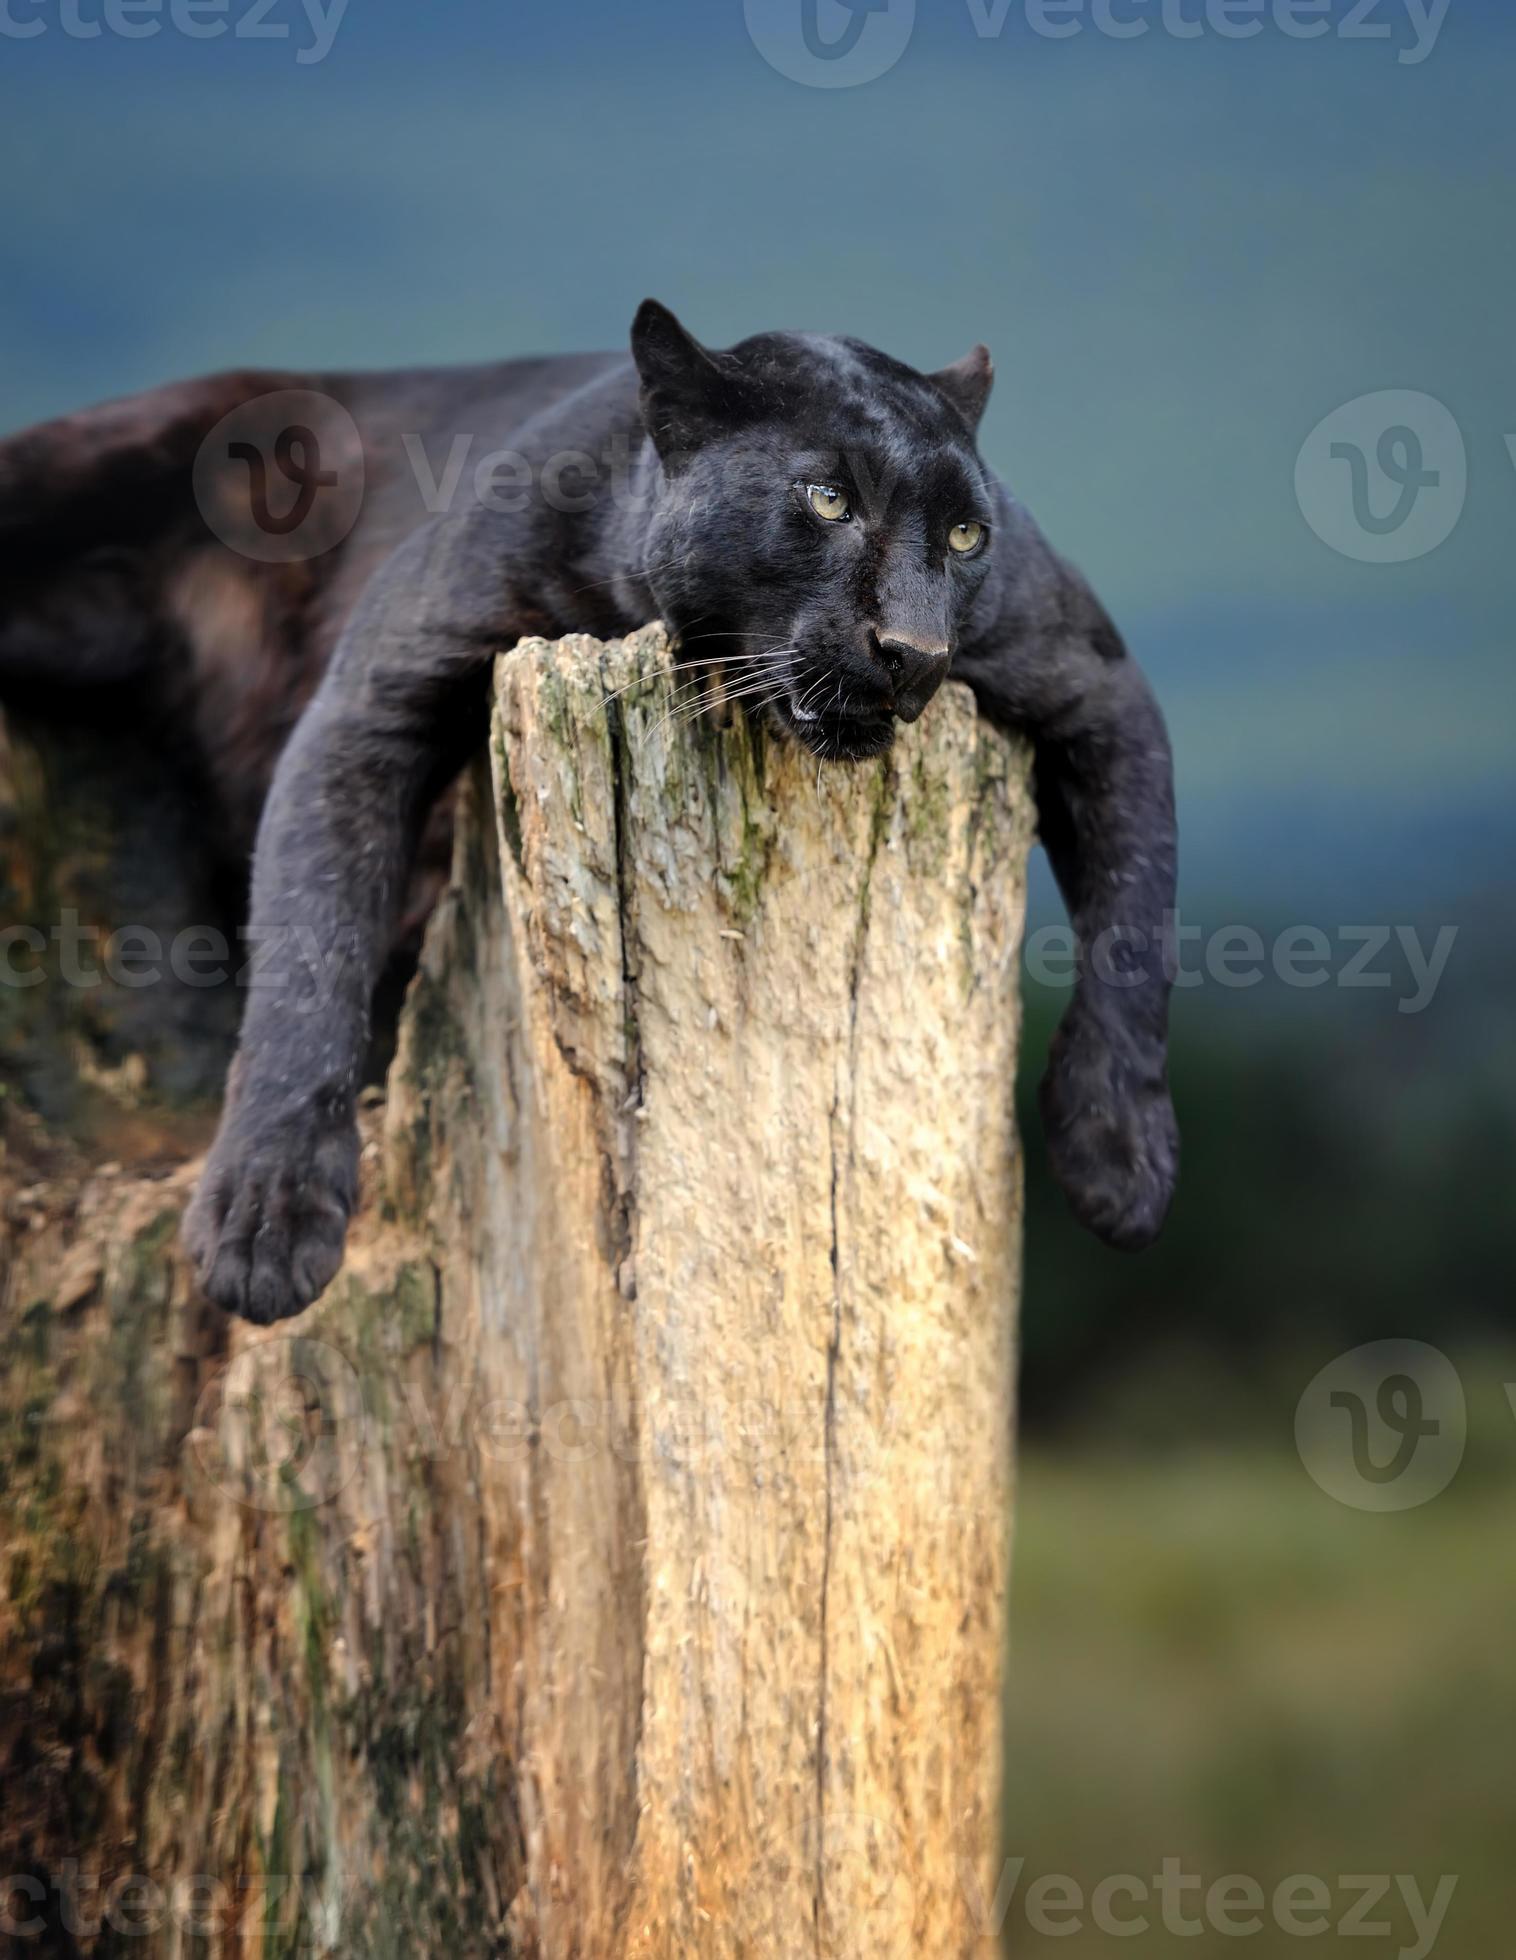 léopard noir photo